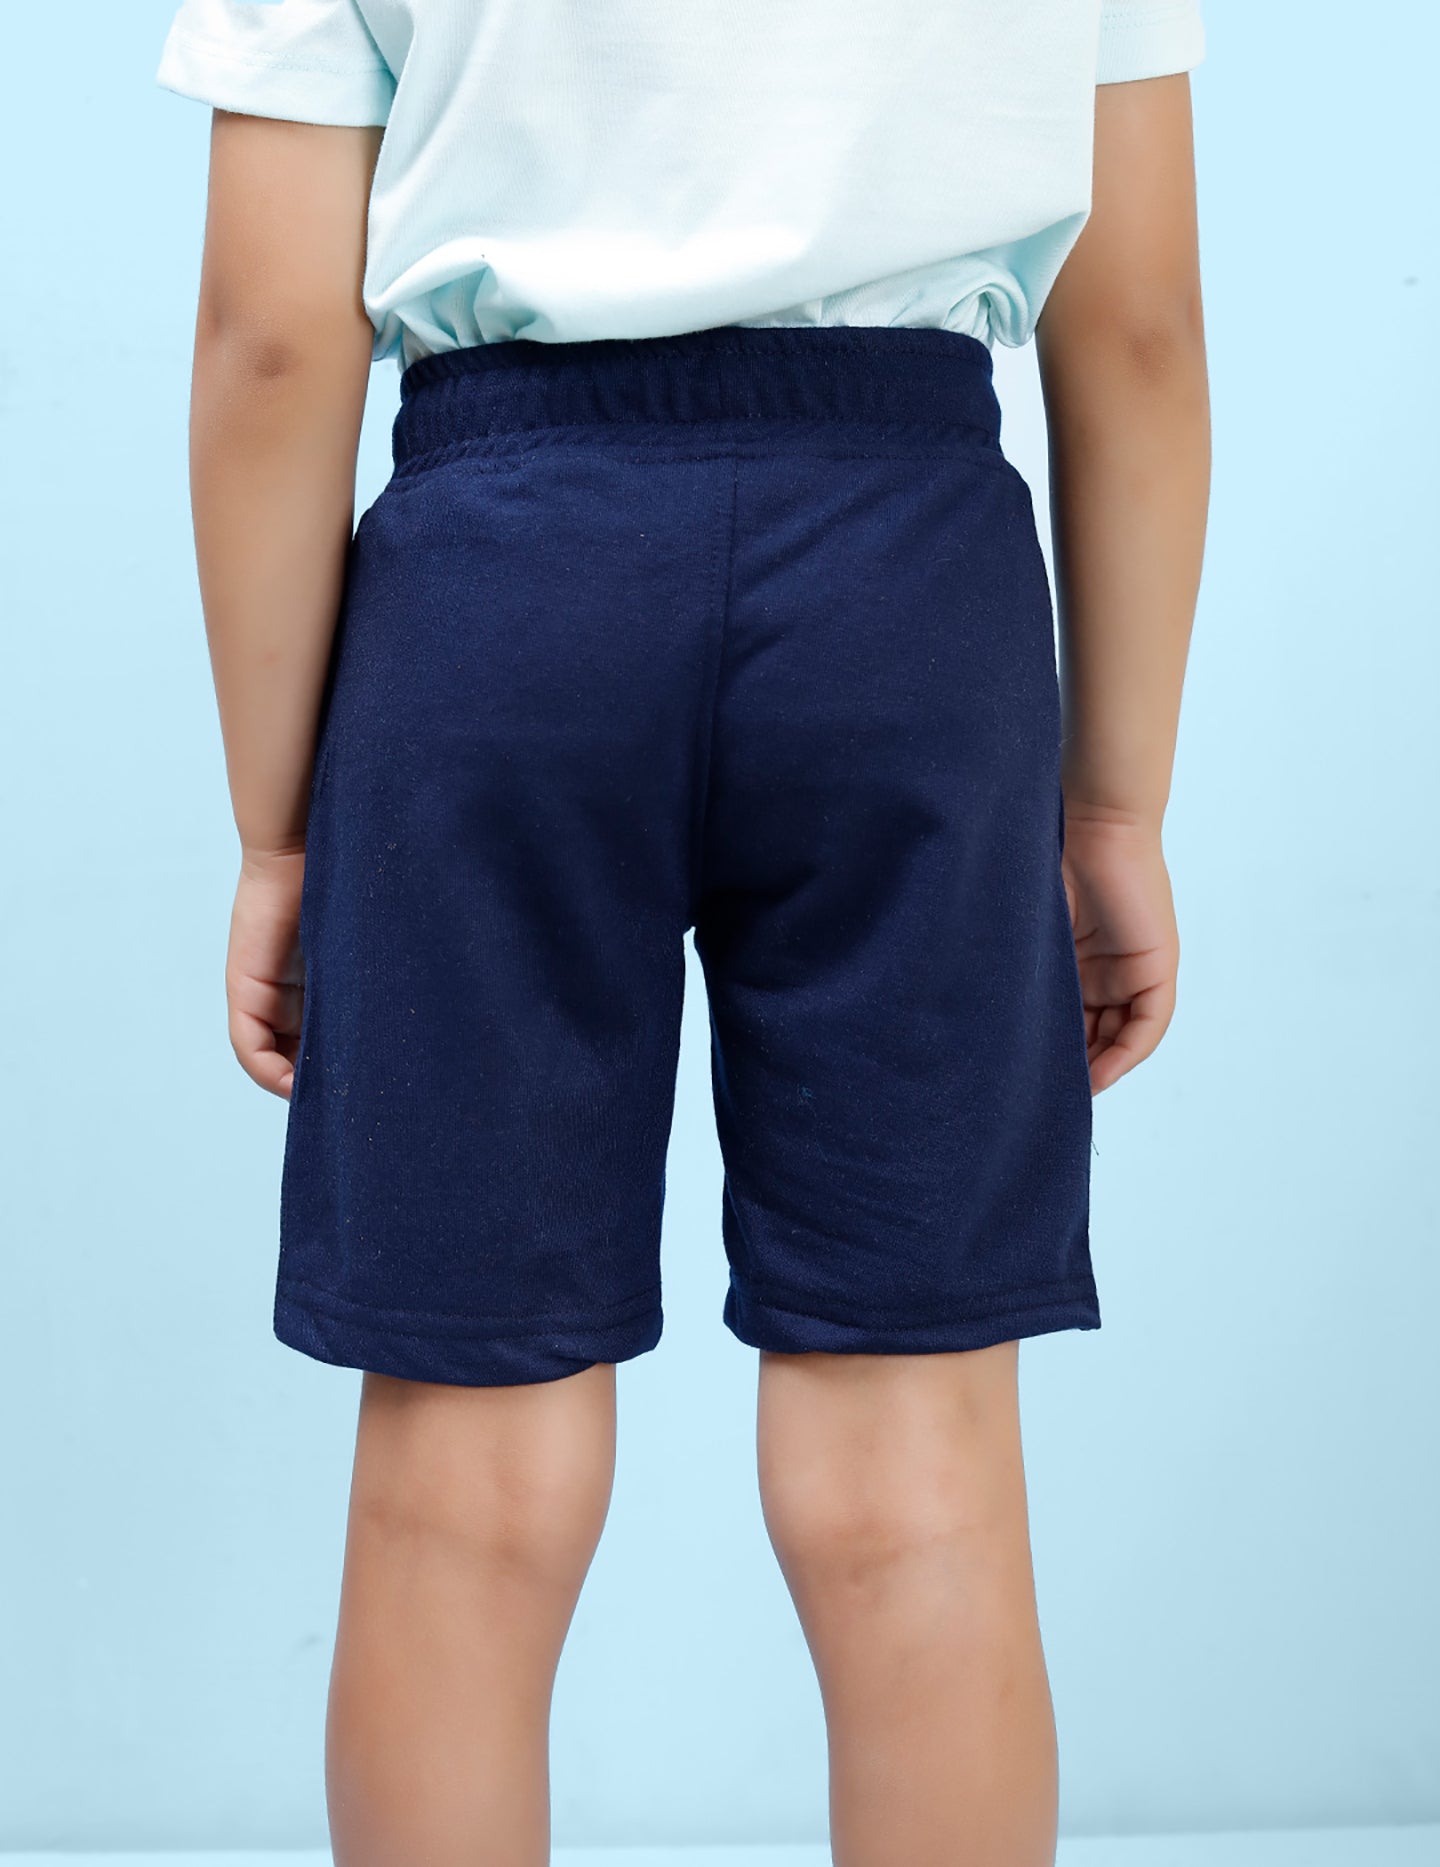 Nusyl Oh Boy Printed Navy Blue Boys Shorts